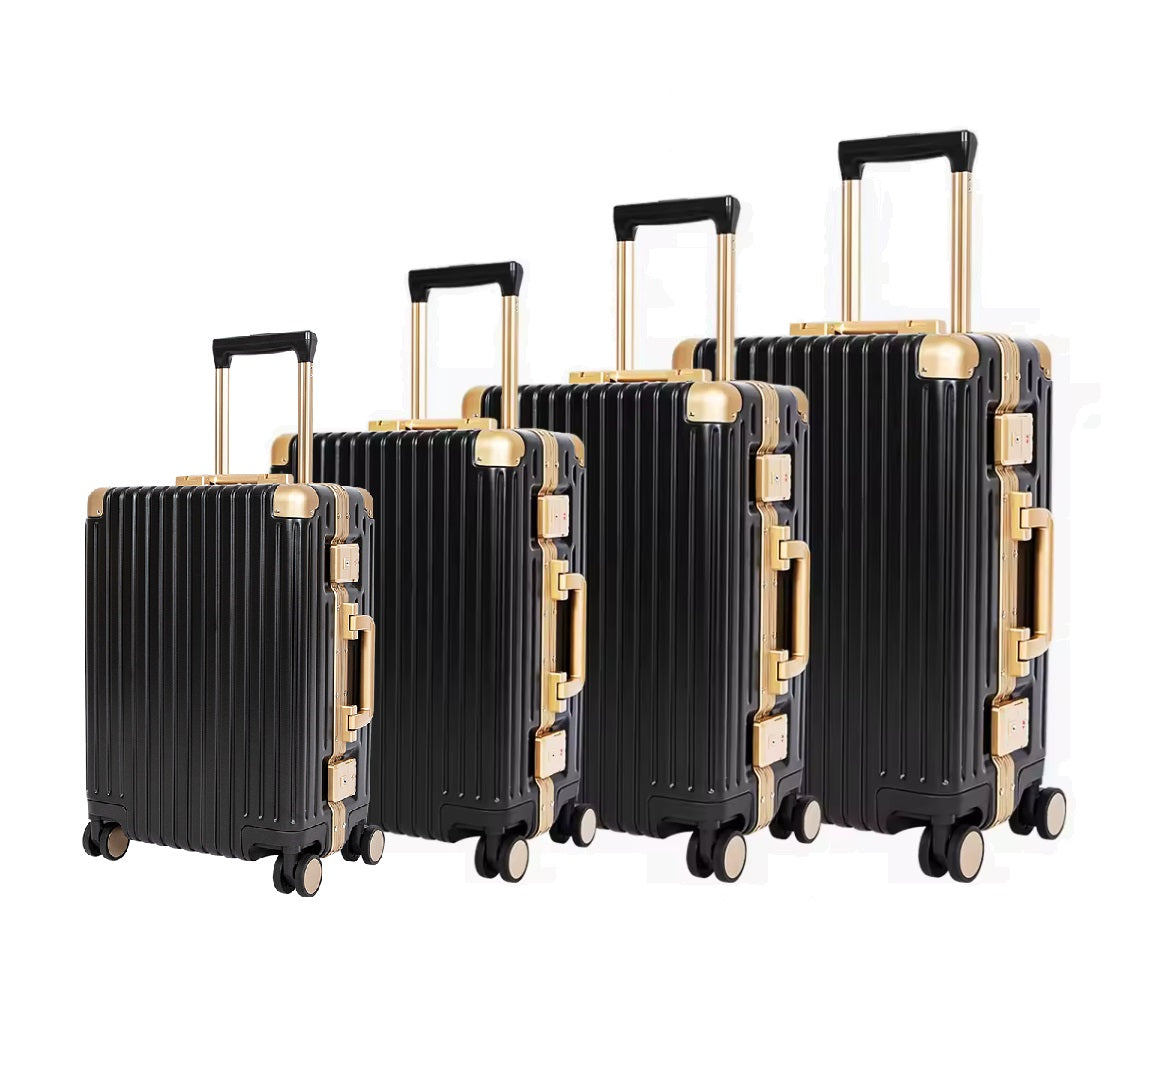 Classic Aluminum Frame Travel Suitcase - 22 inch + 26 inch